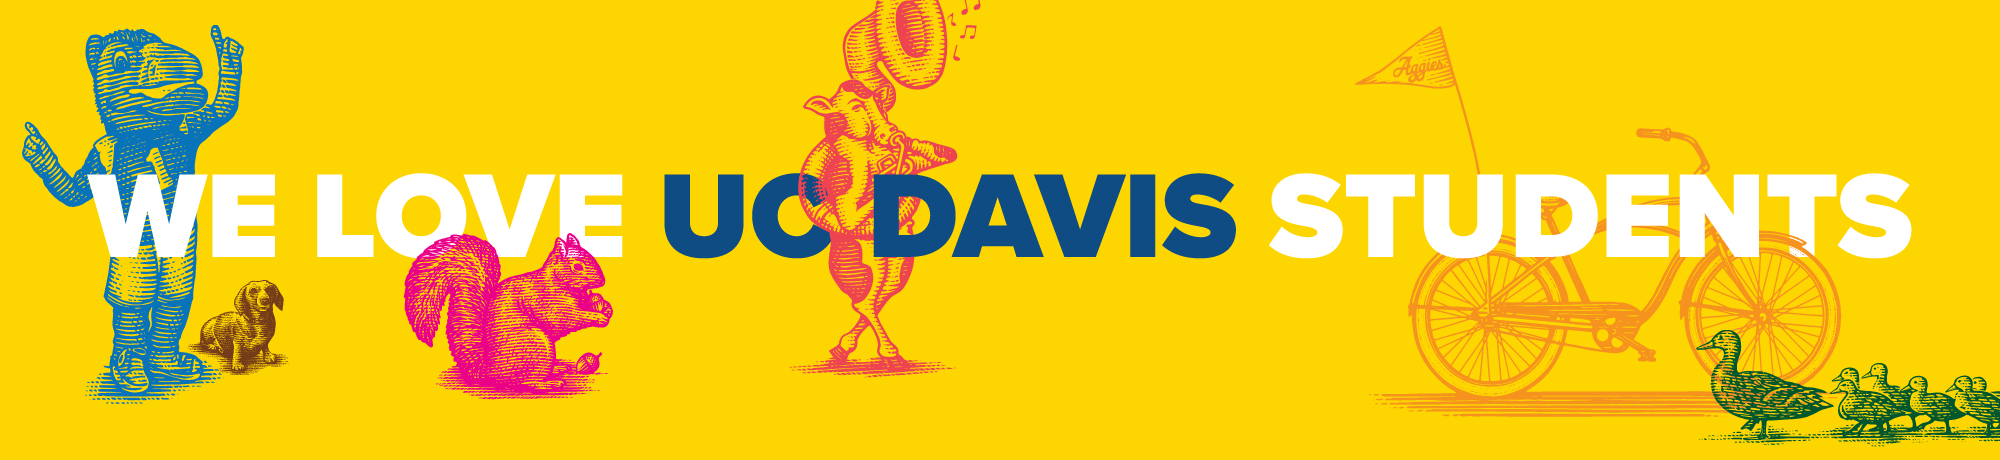 We love UC Davis Students decorative banner